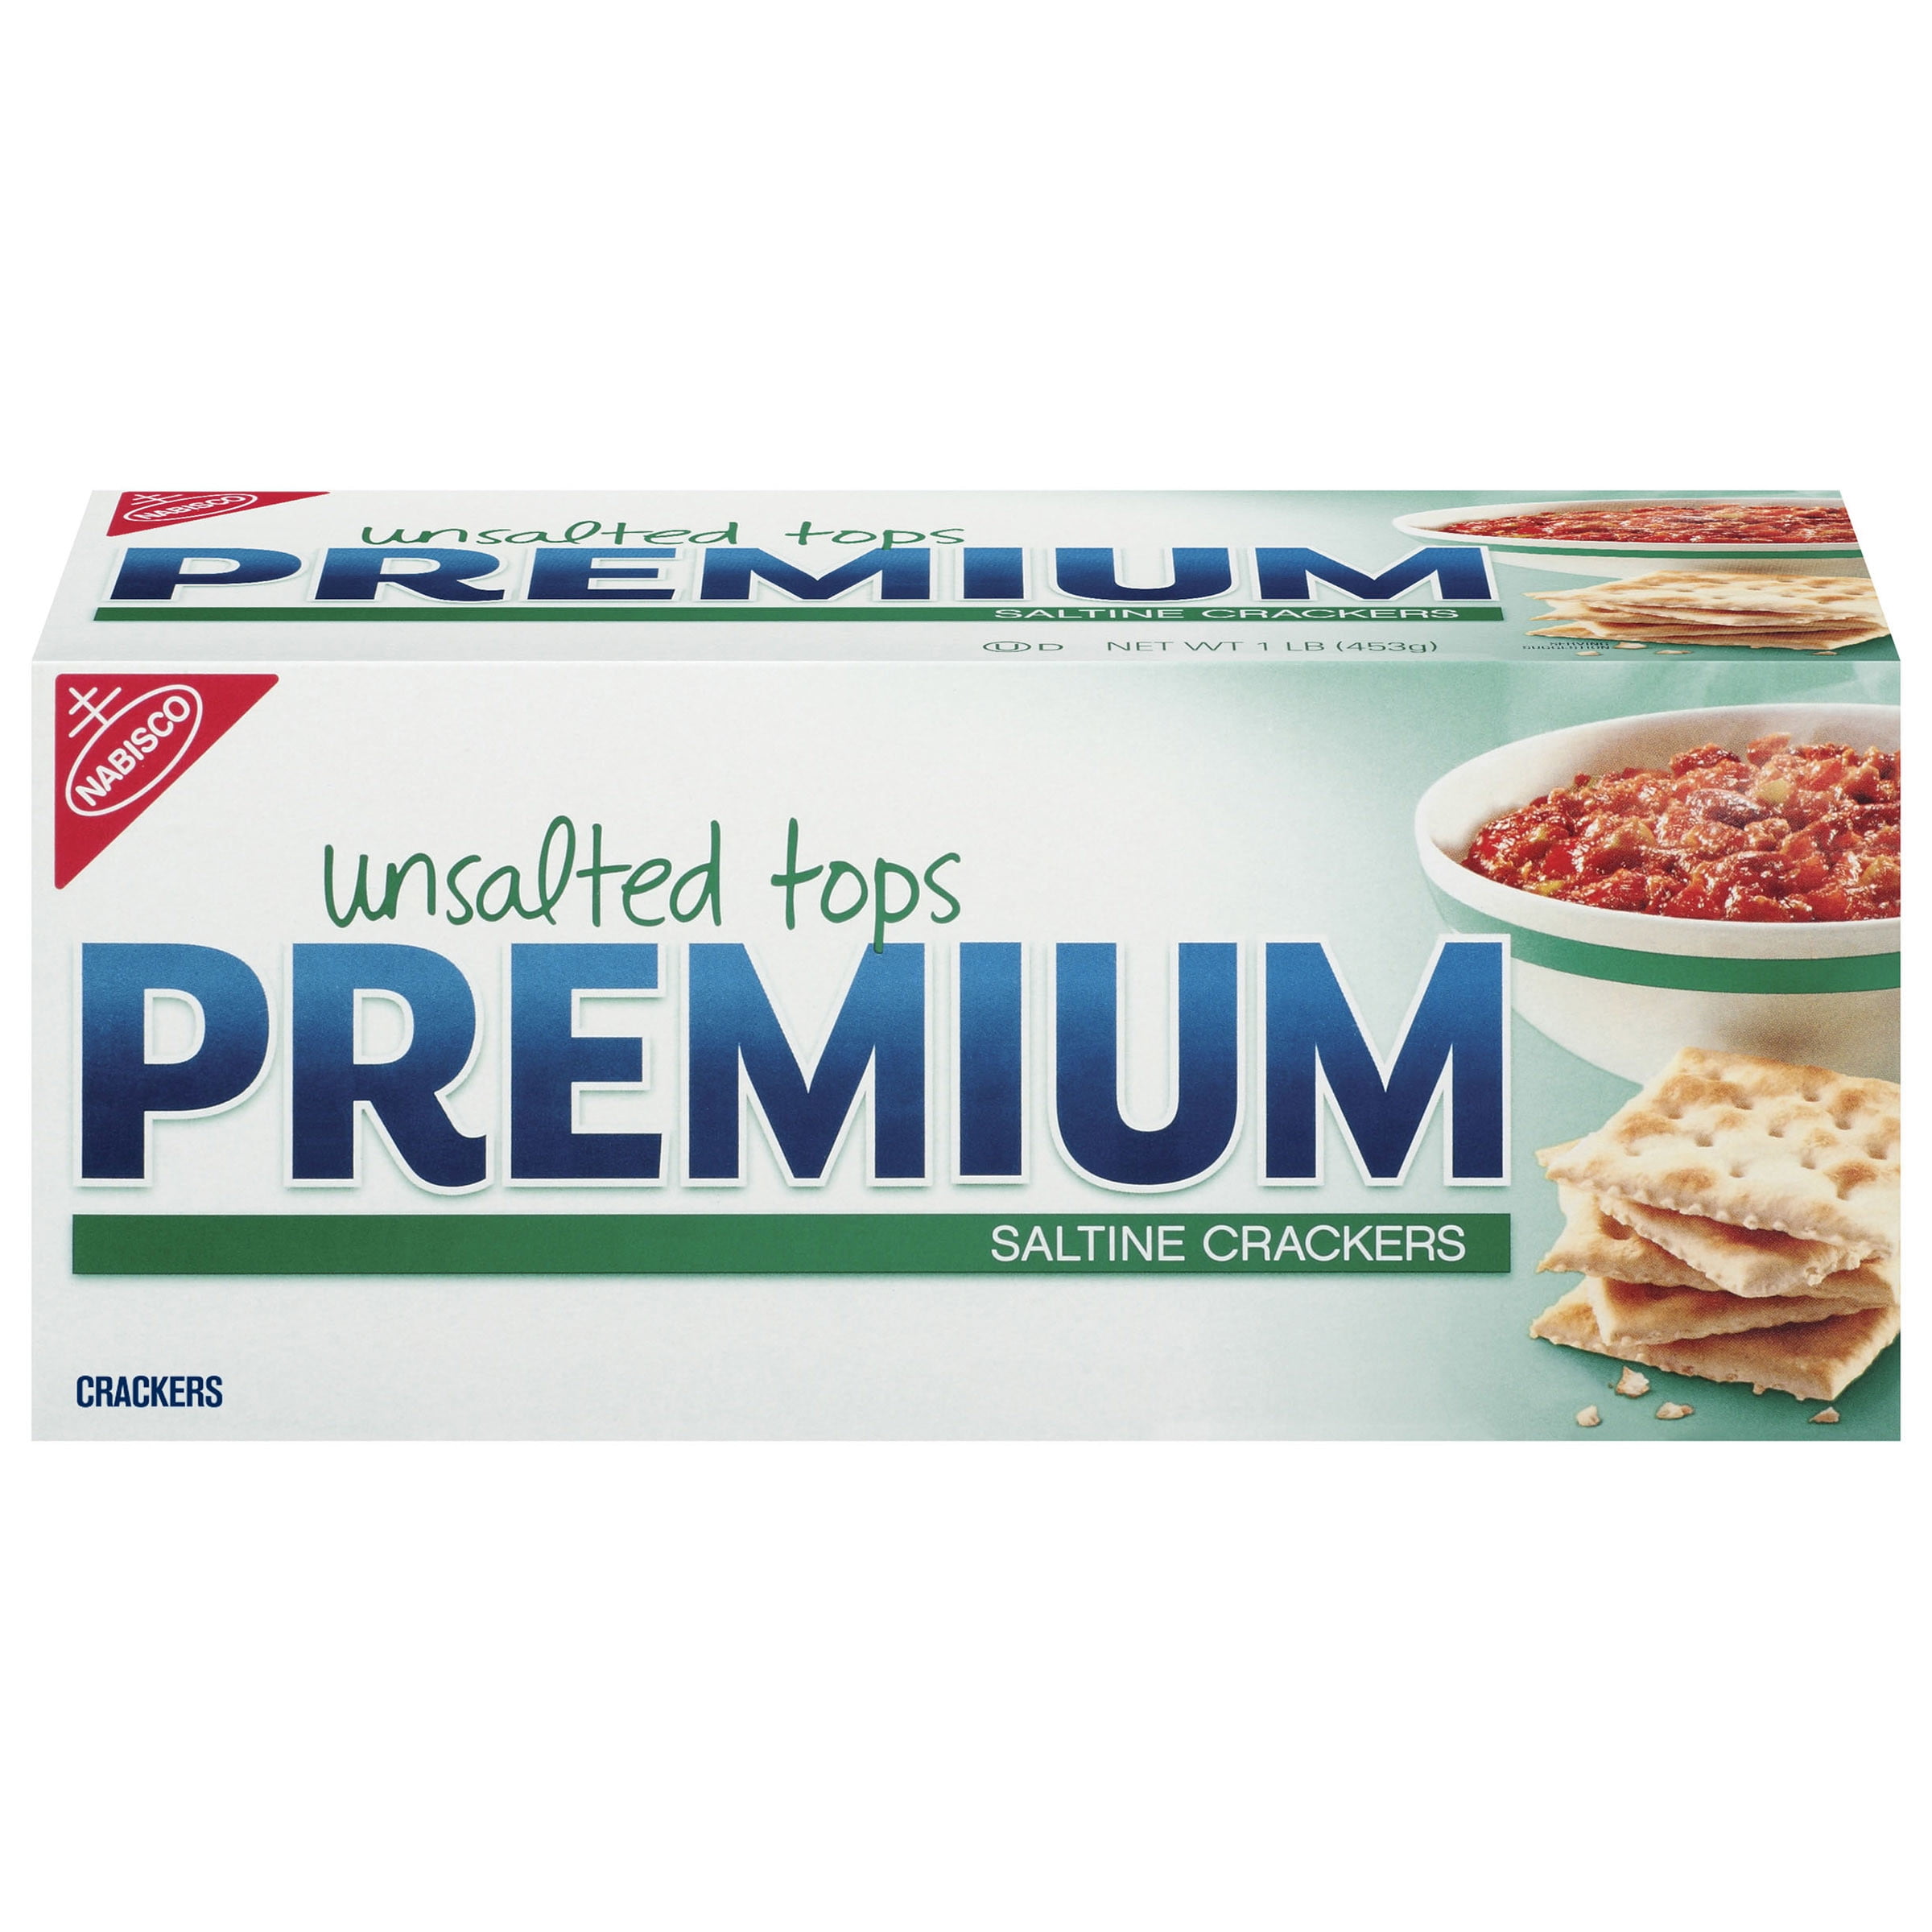 Premium Unsalted Tops Saltine Crackers, 16 oz - Walmart.com